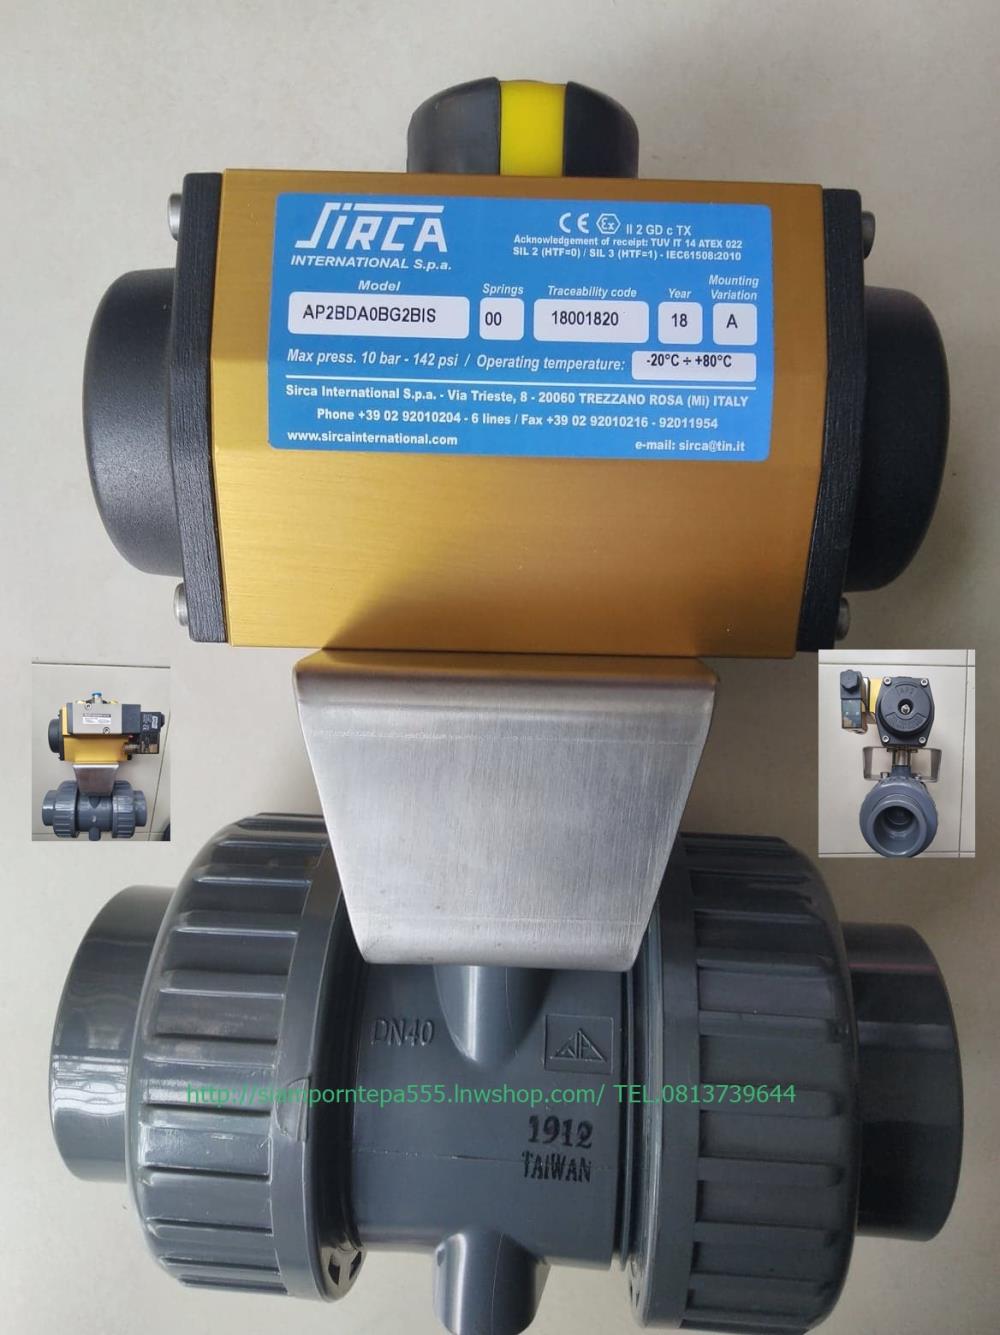 UPVC valve 1-1/2" Sirca actuator หัวขับลม ใช้กับ ลม น้ำ และทนสารเคมีบางชนิด โดยใช้ลมควบคุม ส่งฟรีทั่วประเทศ,UPVC valve 1-1/2" Sirca actuator หัวขับลม,Sirca actuator หัวขับลม ใช้กับ ลม น้ำ และทนสารเคมีบางชนิด,UPVC valve 1-1/2" Sirca actuator หัวขับลม โดยใช้ลมควบคุม,UPVC valve 1-1/2" Sirca actuator หัวขับลม,Machinery and Process Equipment/Actuators